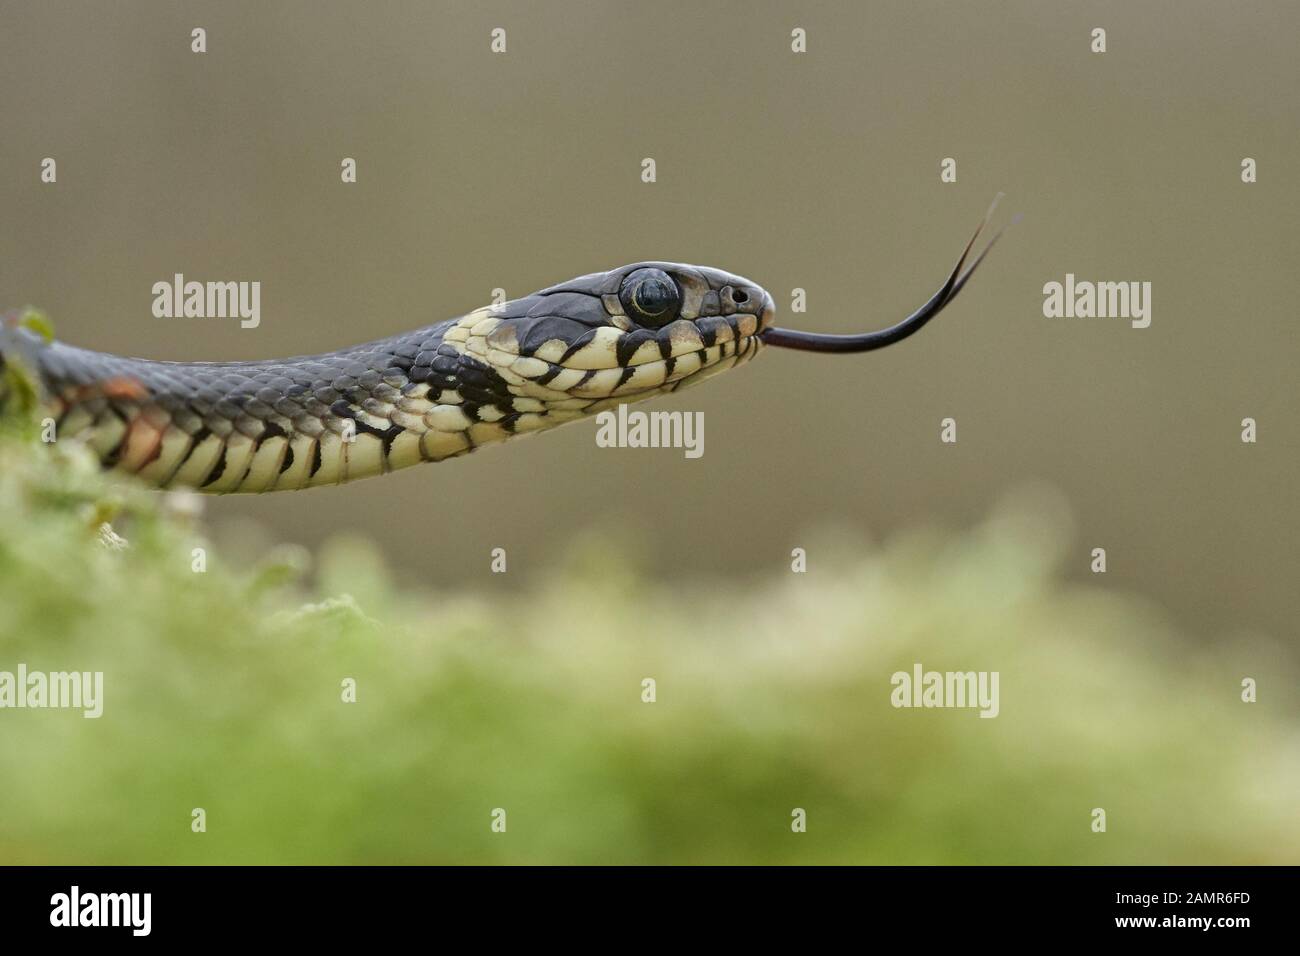 The Grass snake Natrix natrix in Czech Republic Stock Photo